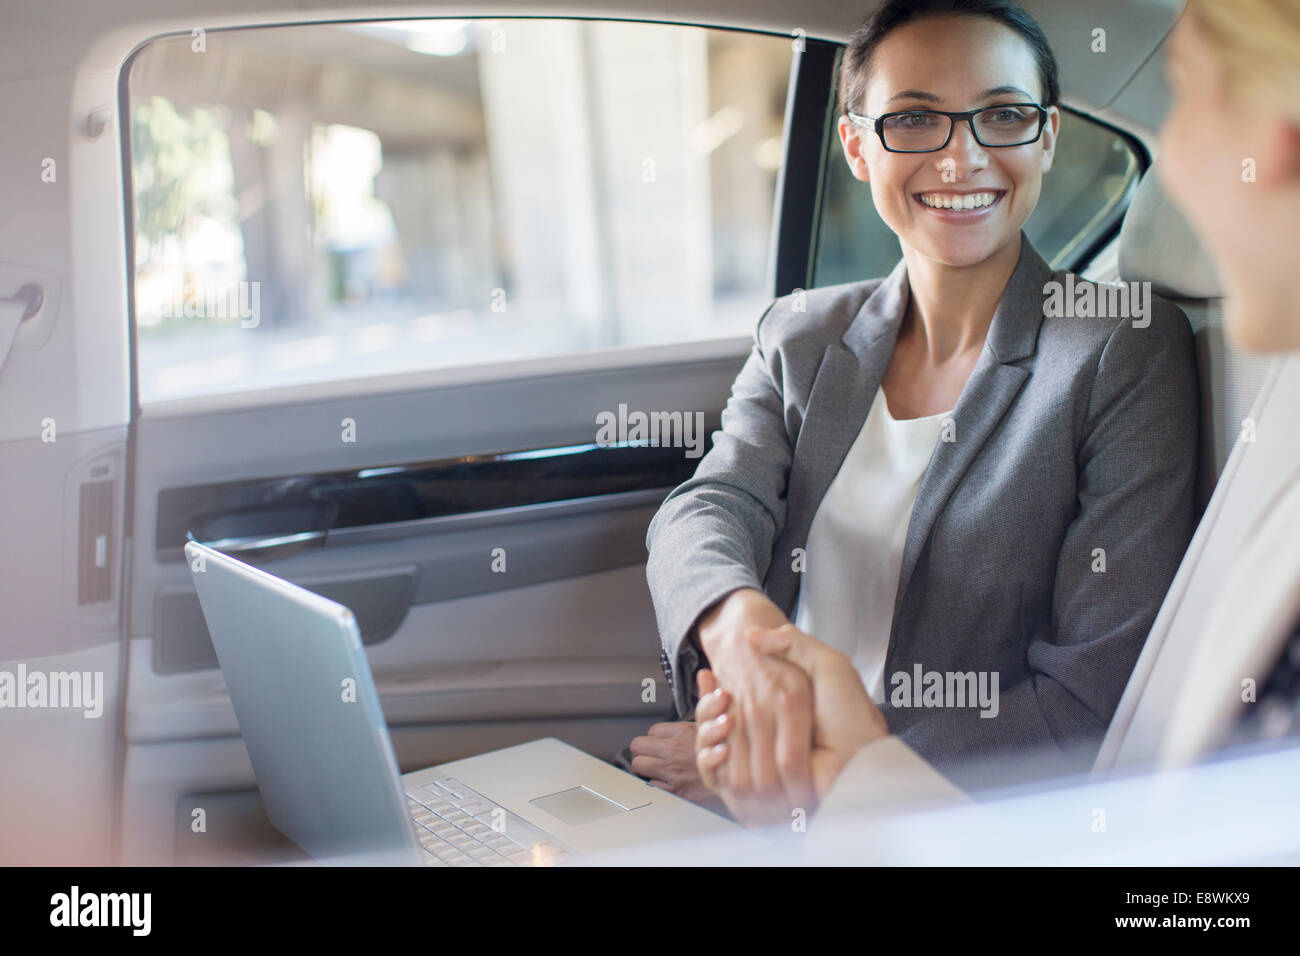 Businesswomen shaking hands in car Banque D'Images